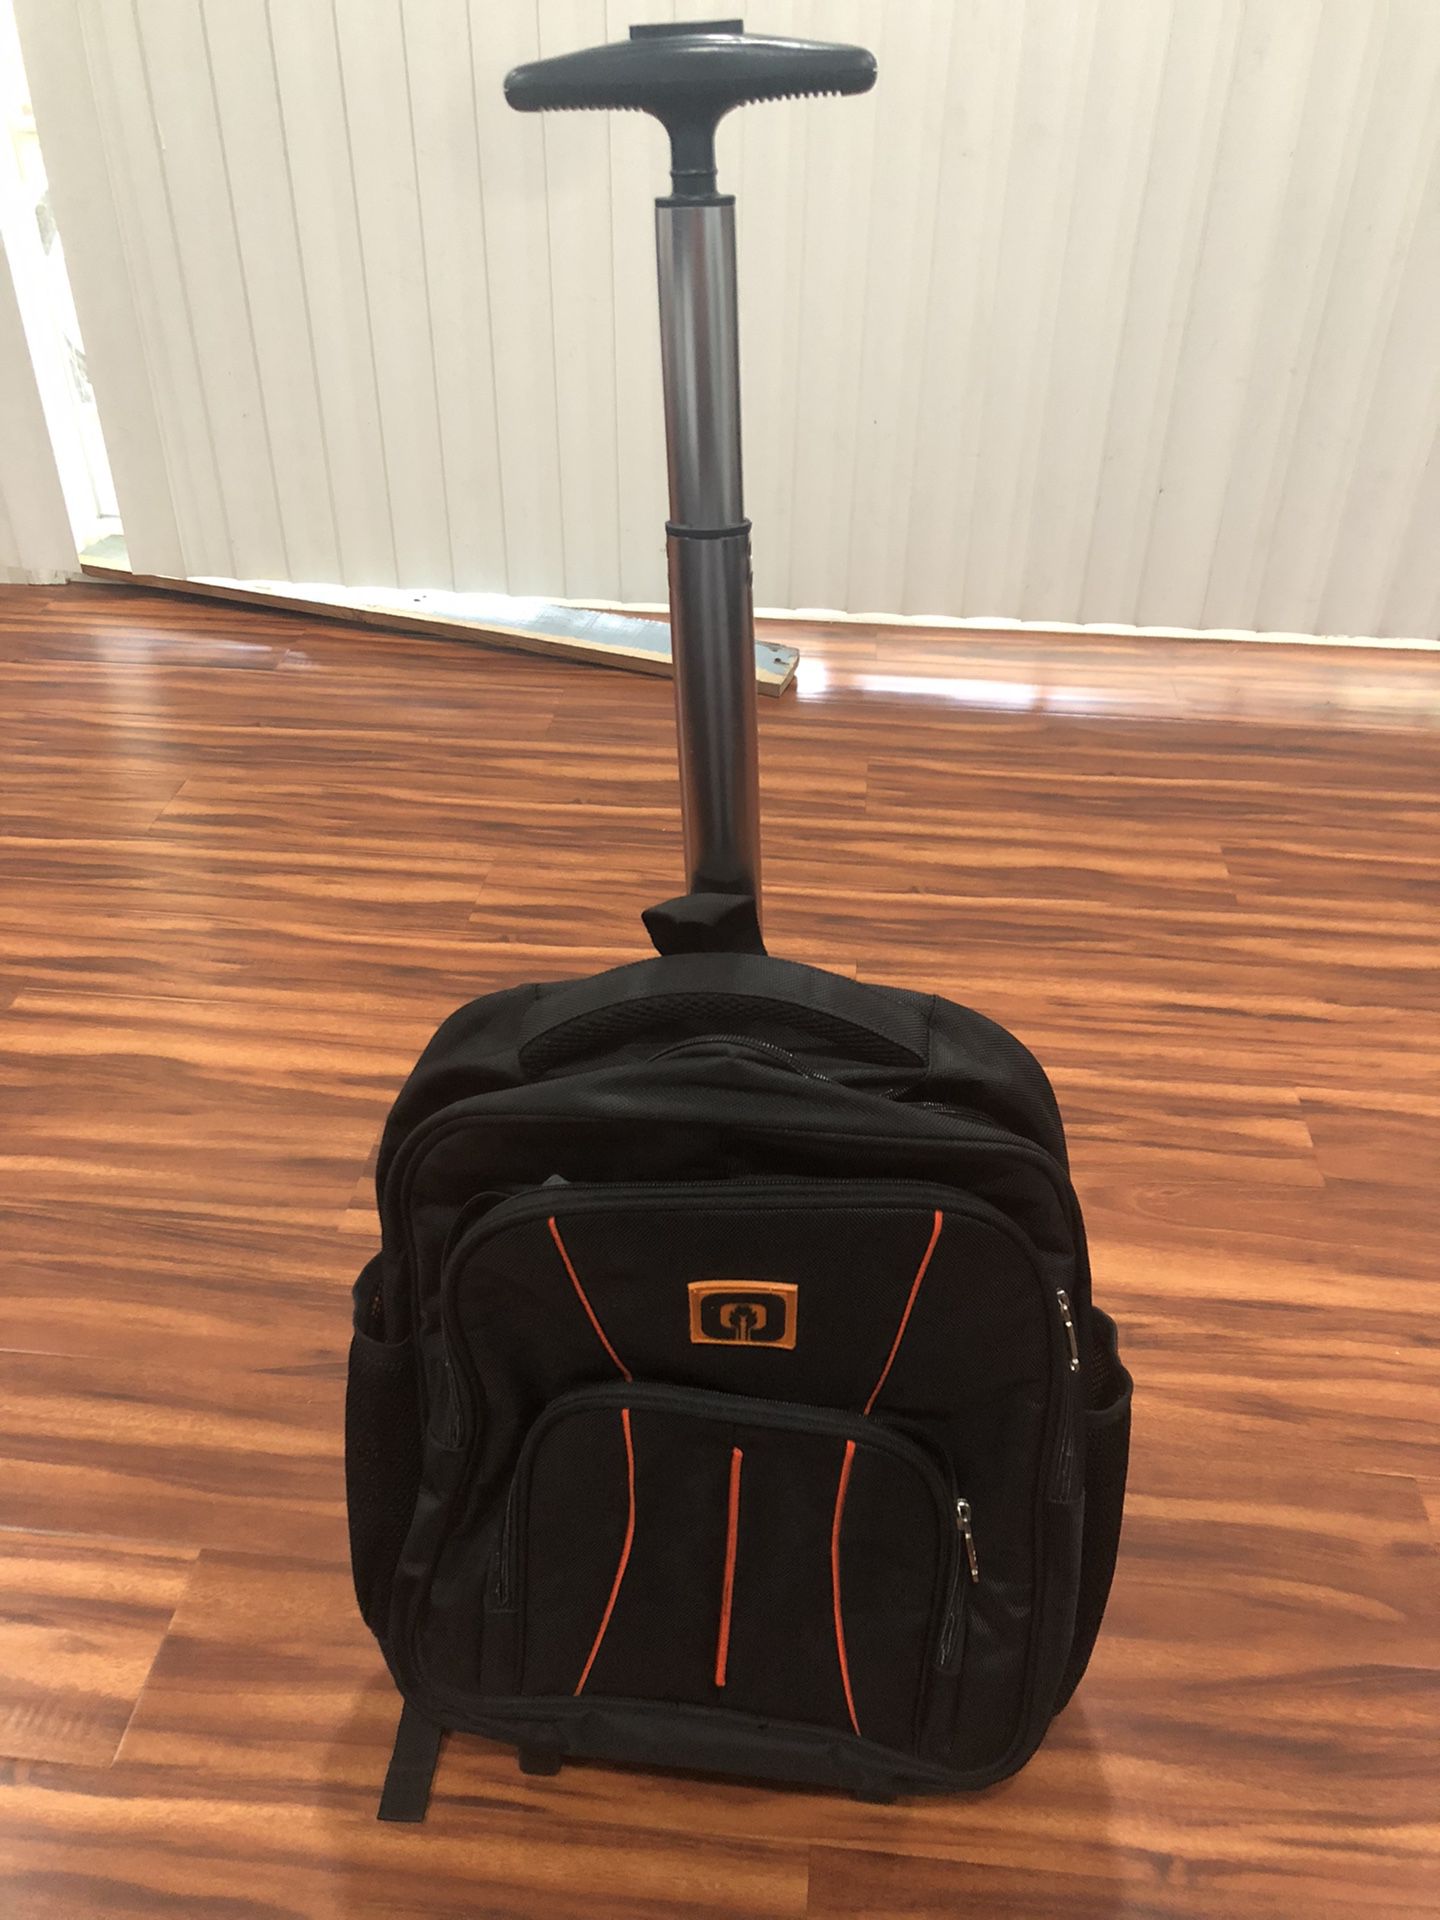 Roller Back Pack For School, Day Use Backpack 